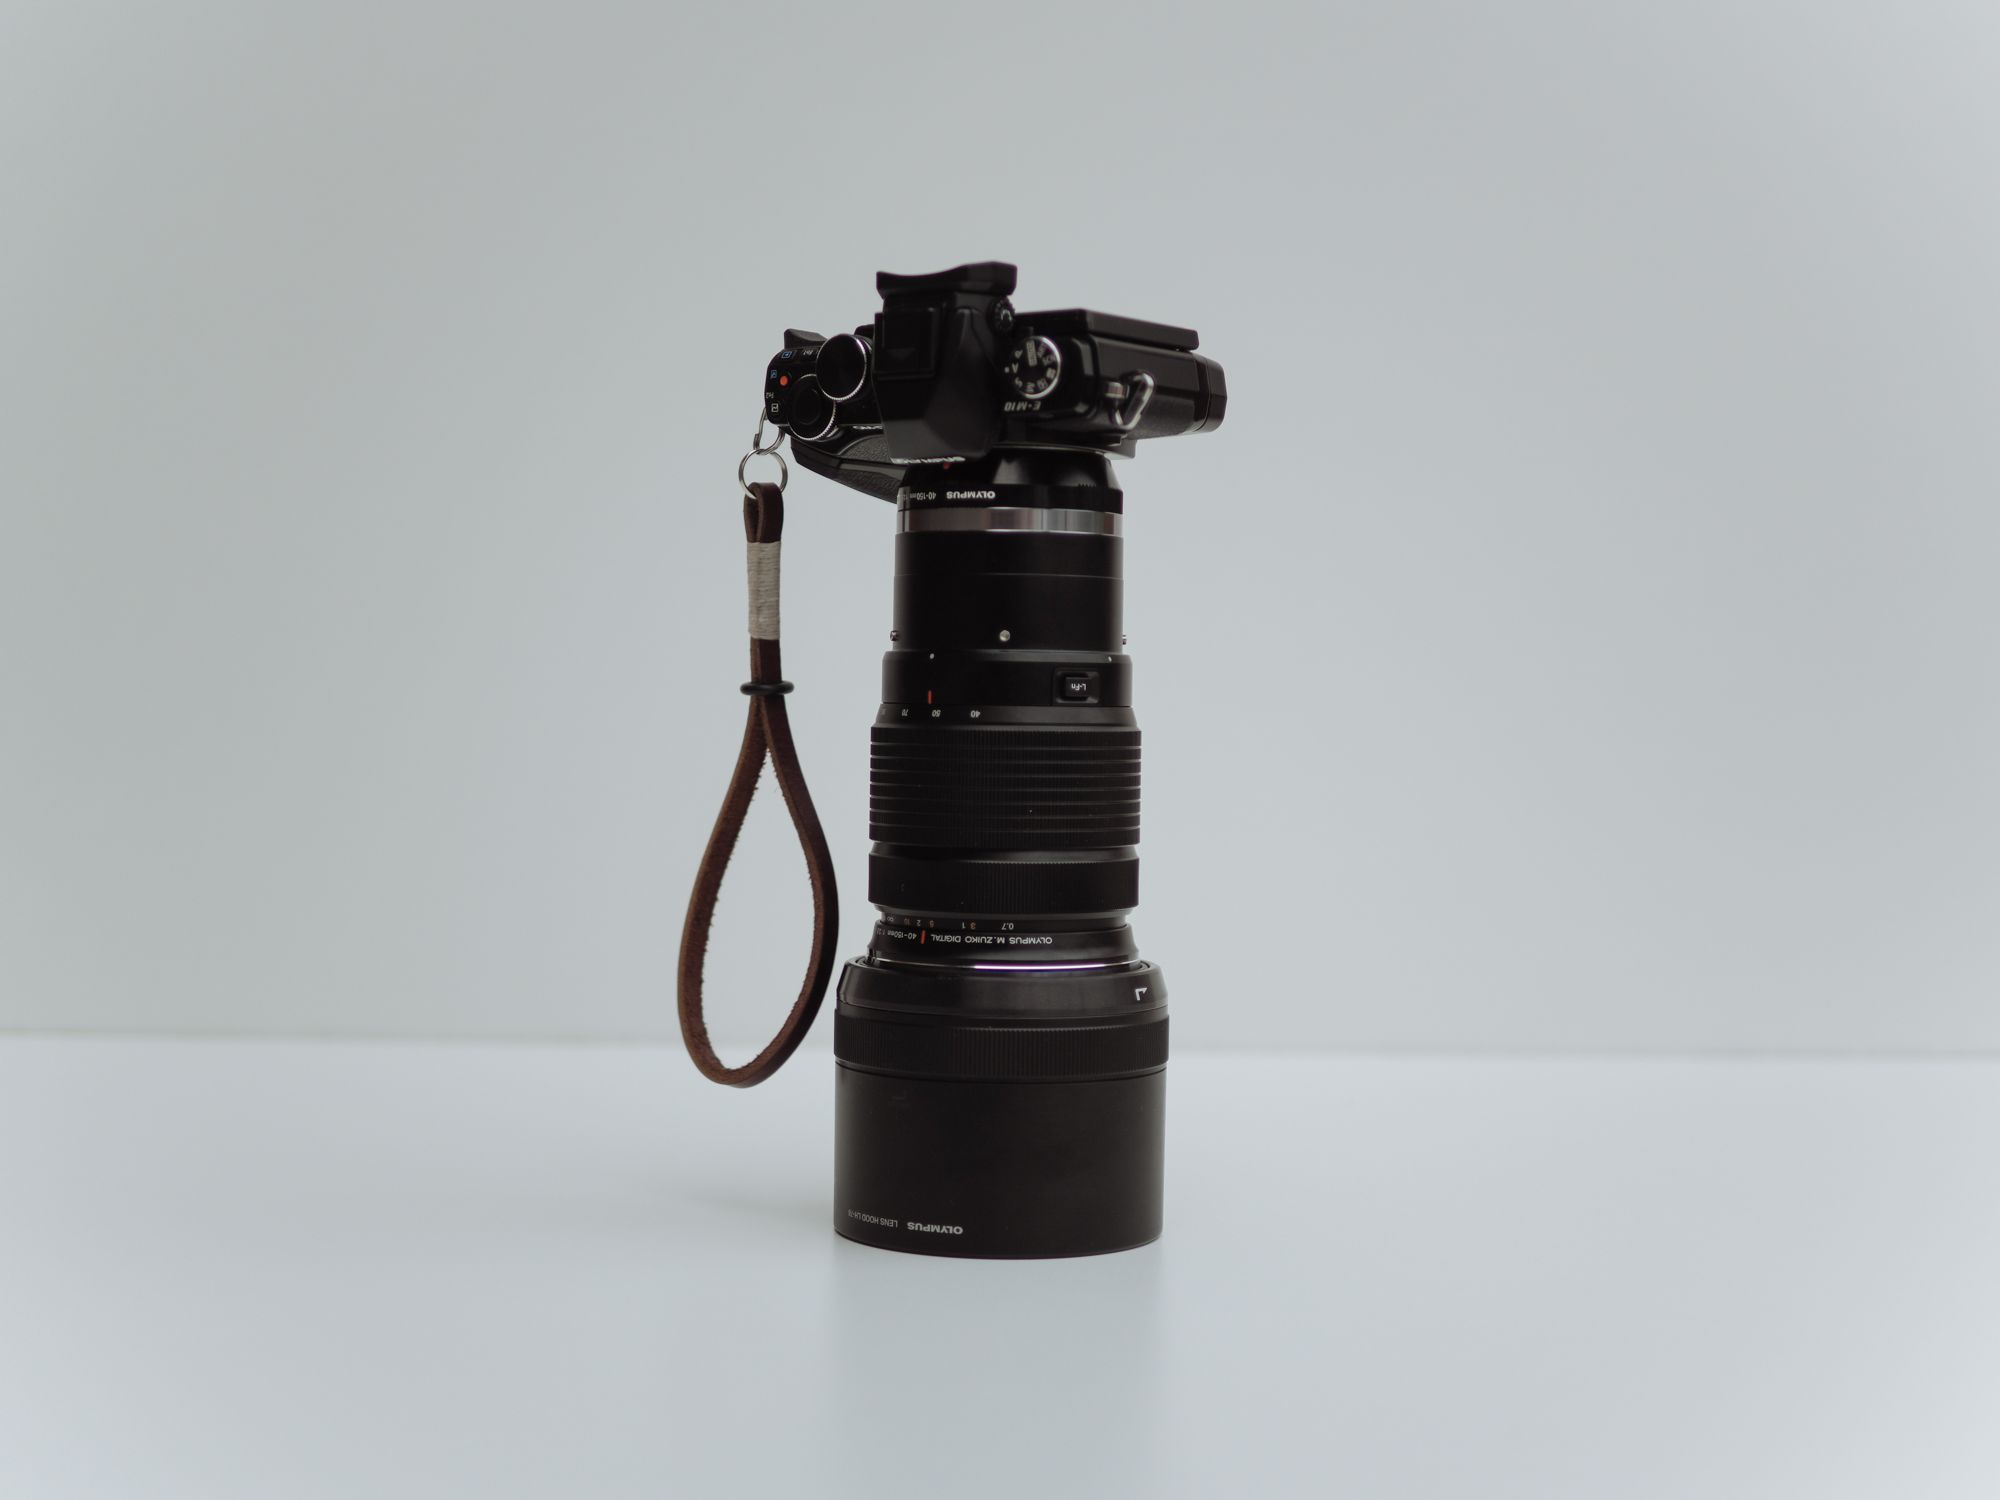 Olympus 40-150mm PRO Lens